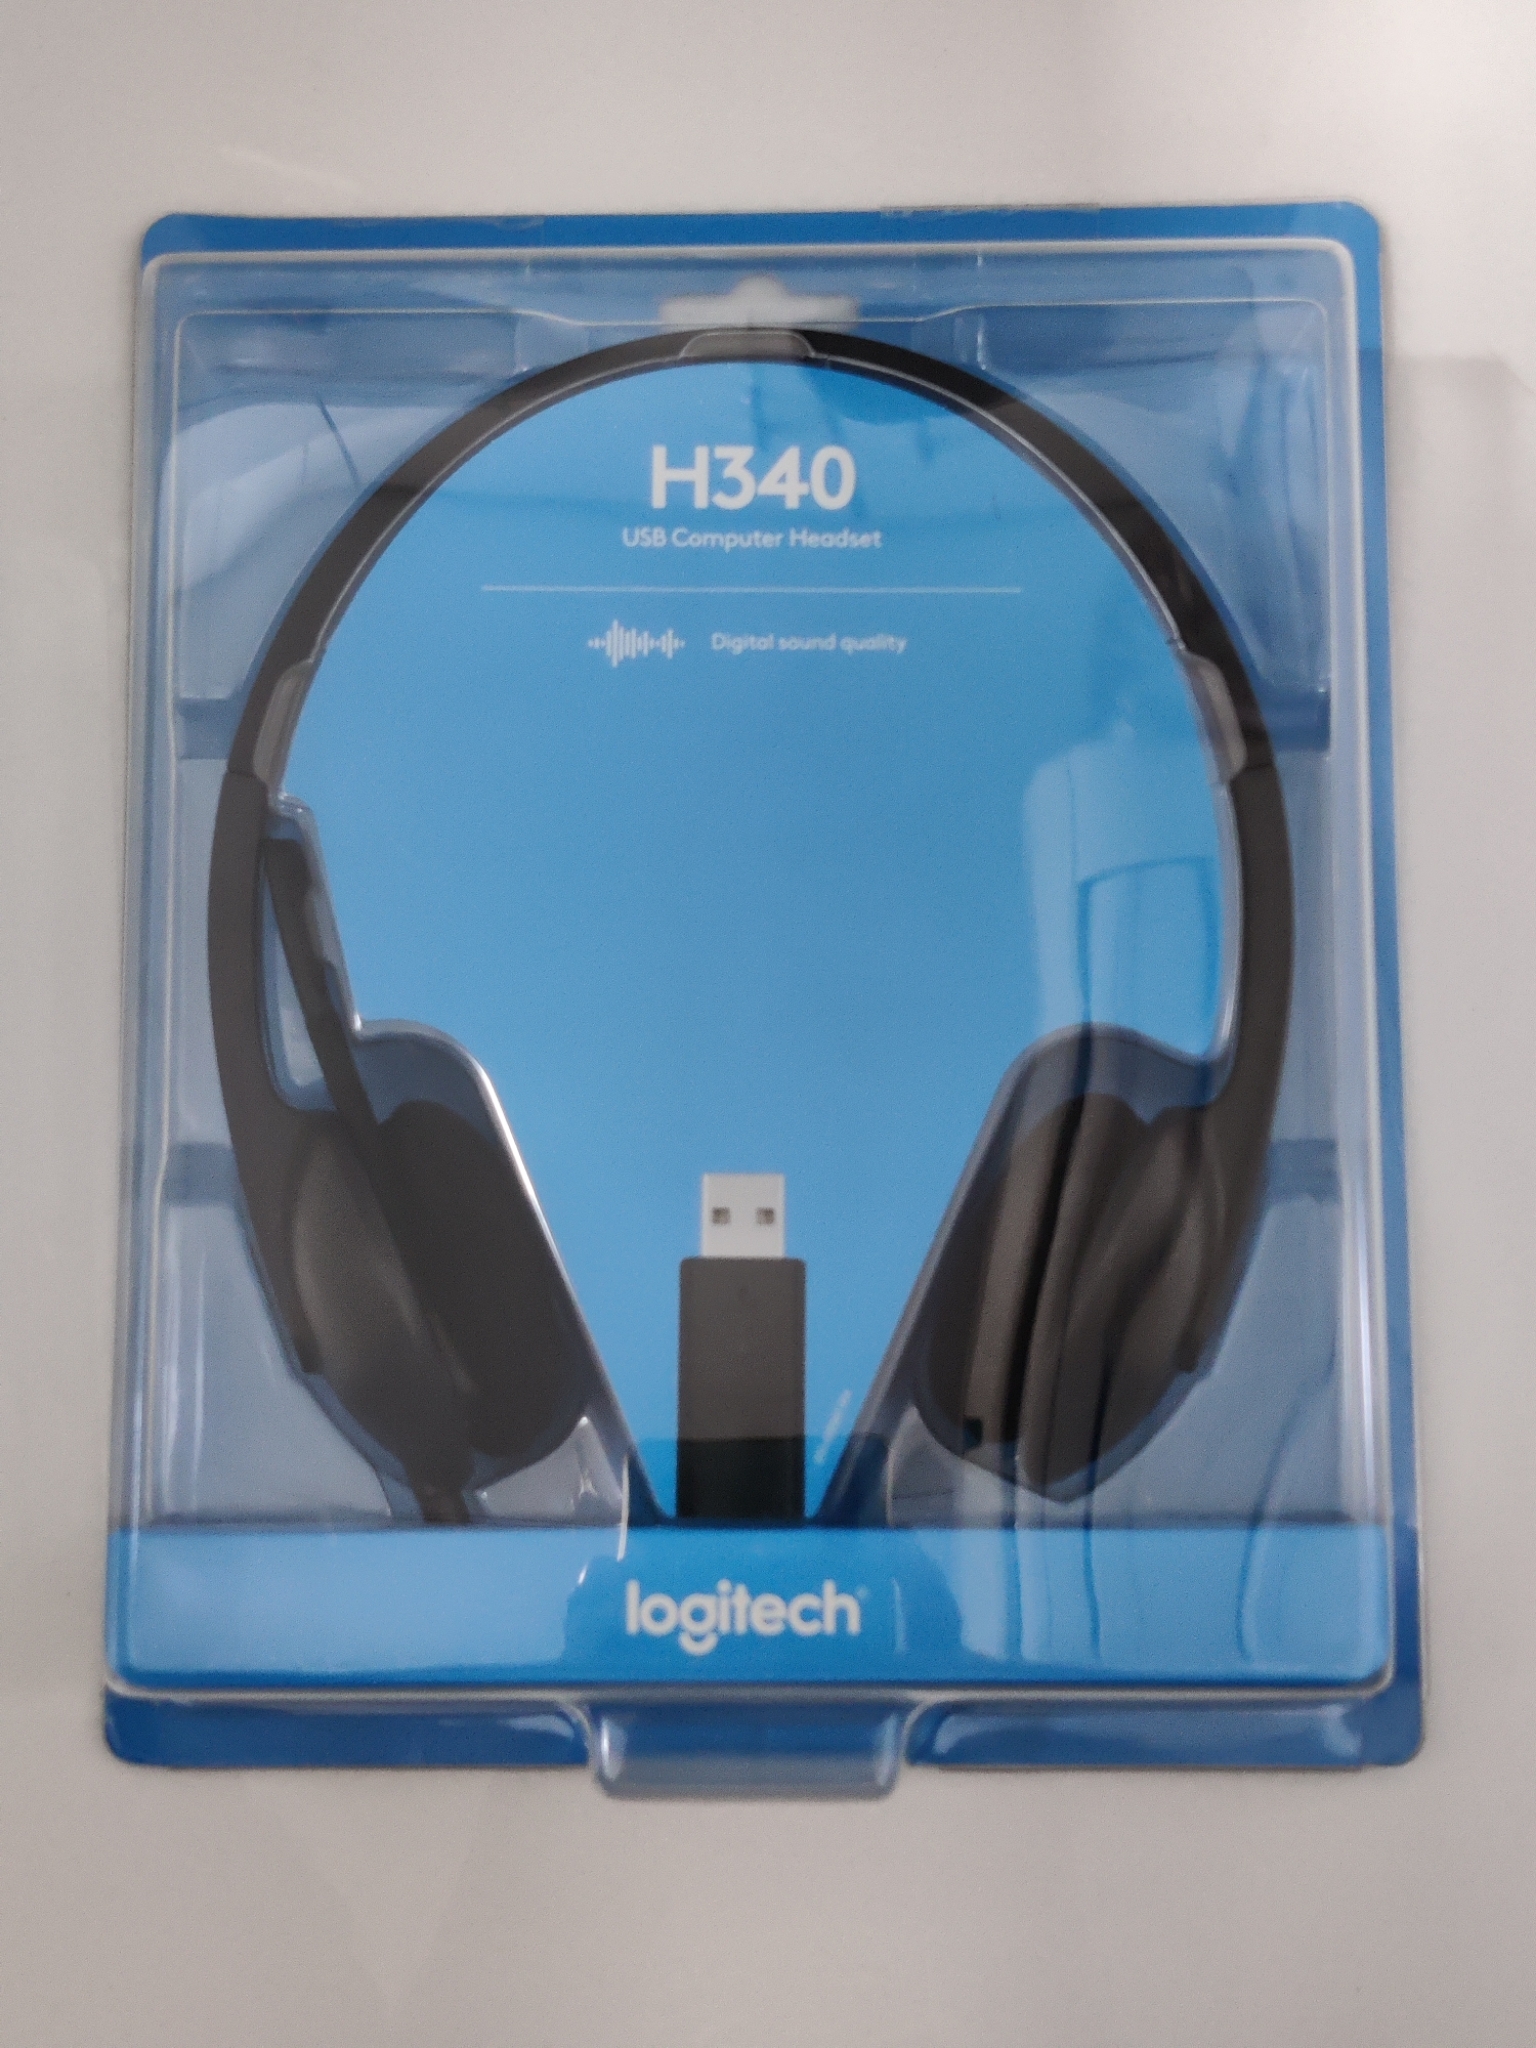 Rs.2006 – Logitech H340 USB Computer Headset – LT Online Store